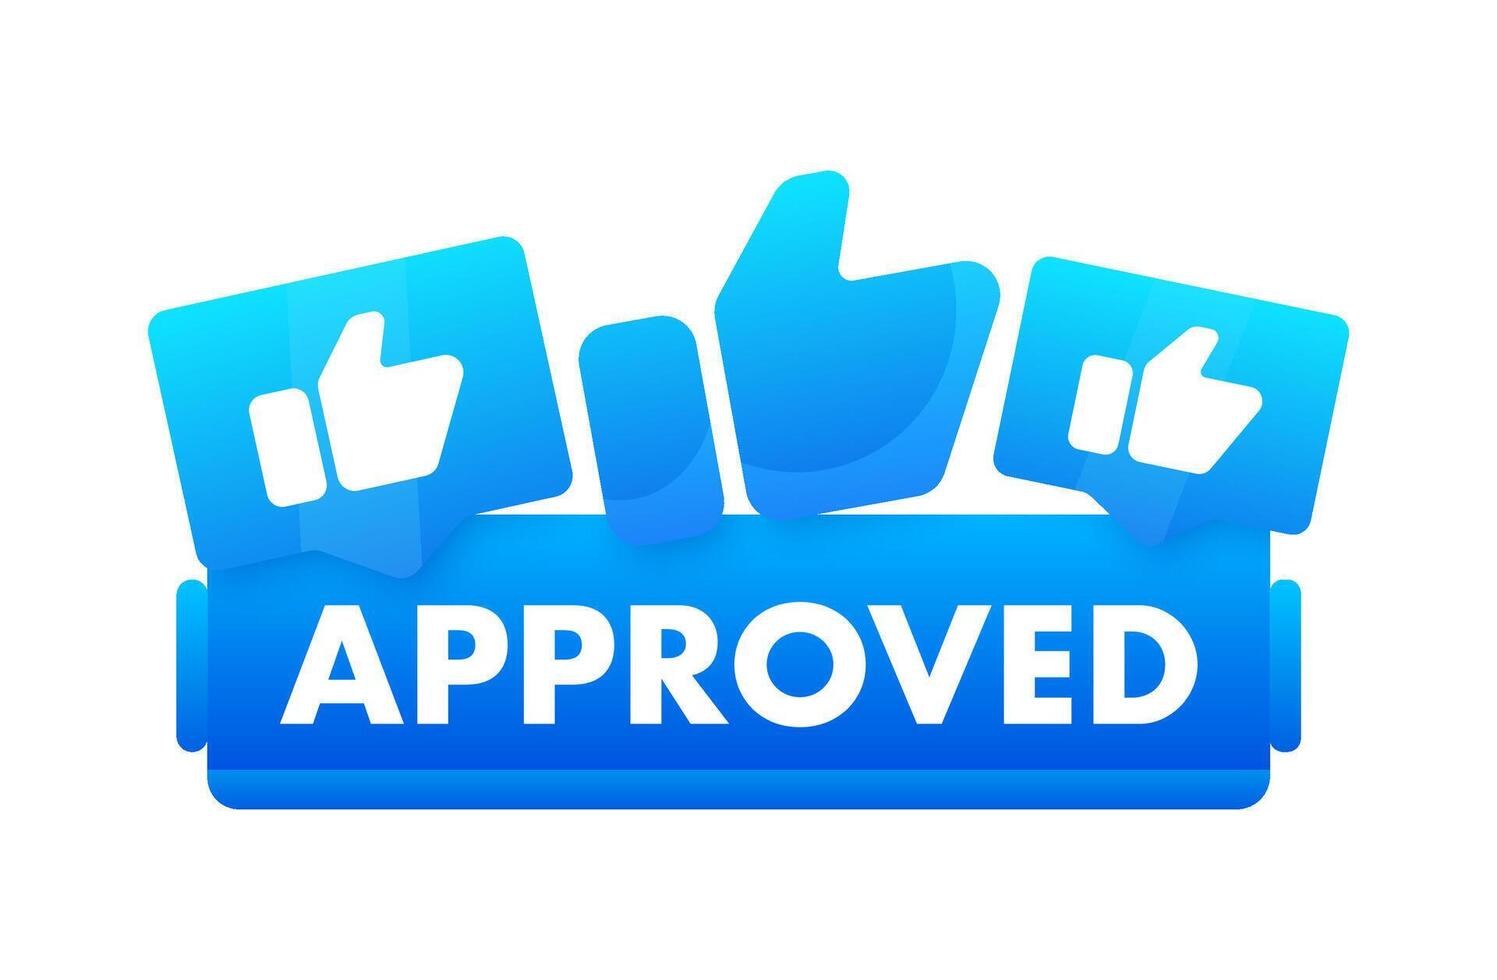 vector ilustración de un azul aprobado bandera con pulgares arriba íconos simbolizando positivo verificación, aceptación, o aprobación